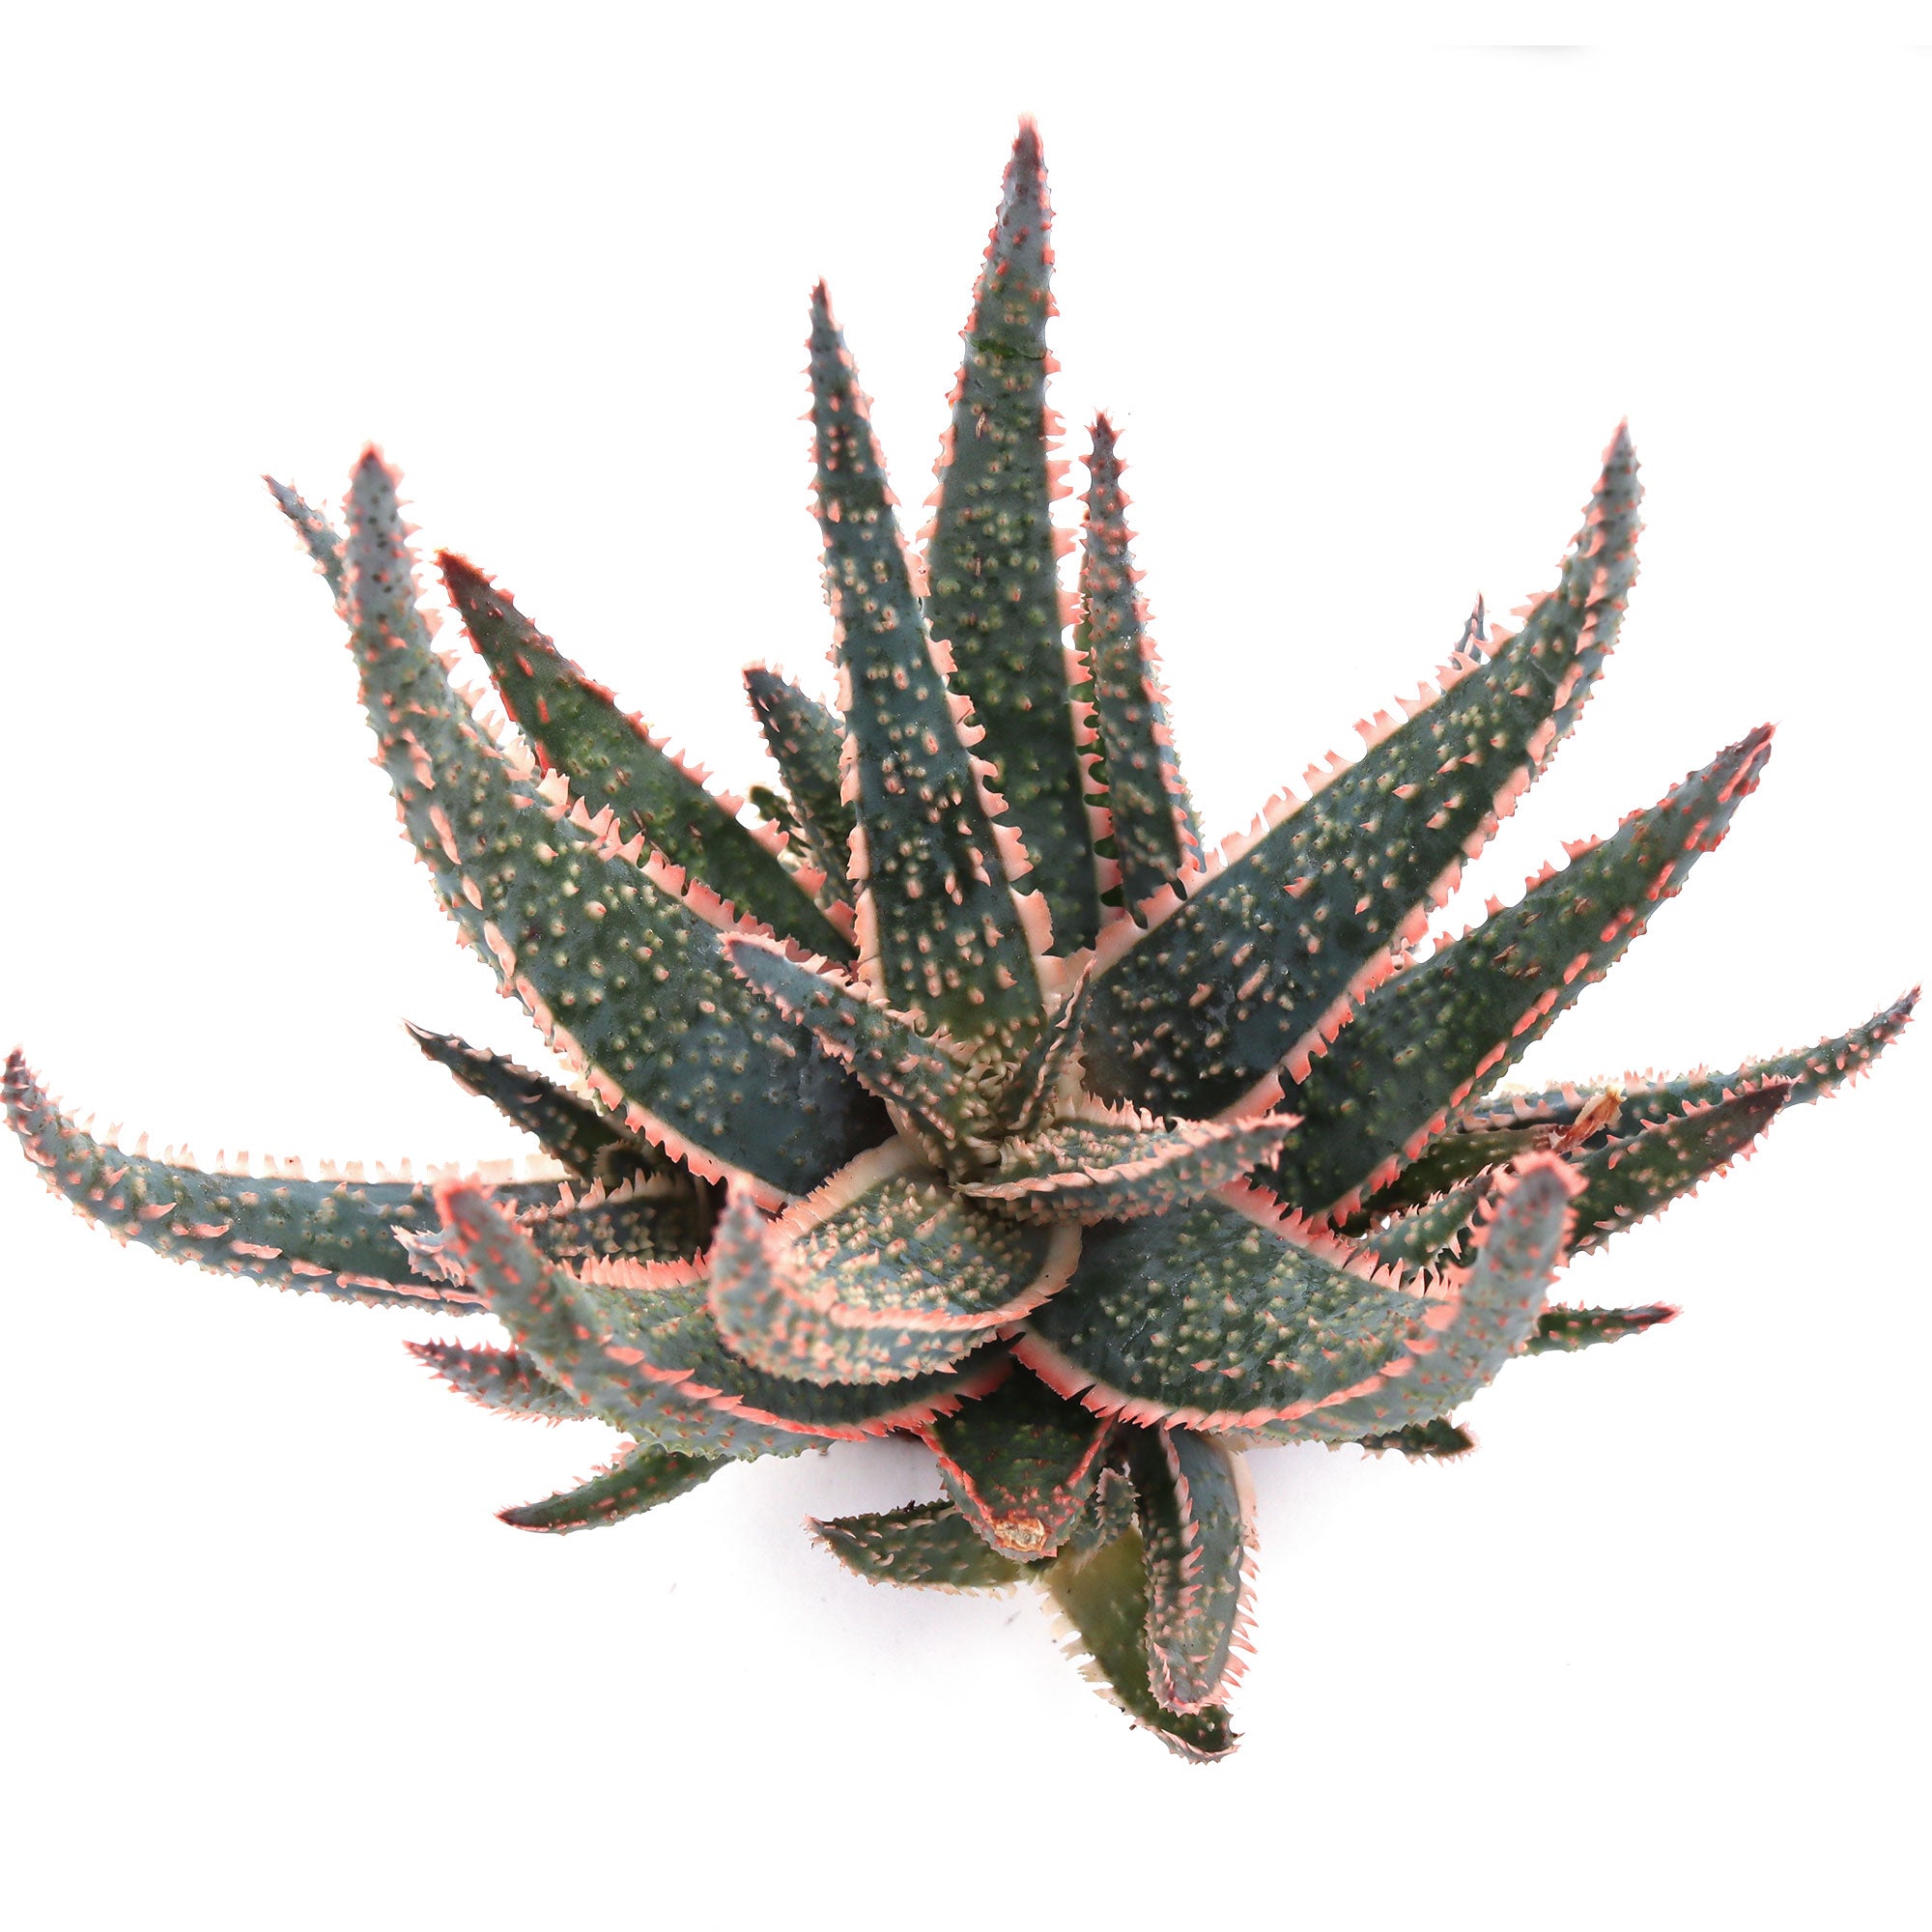 Aloe 'Purple Haze'